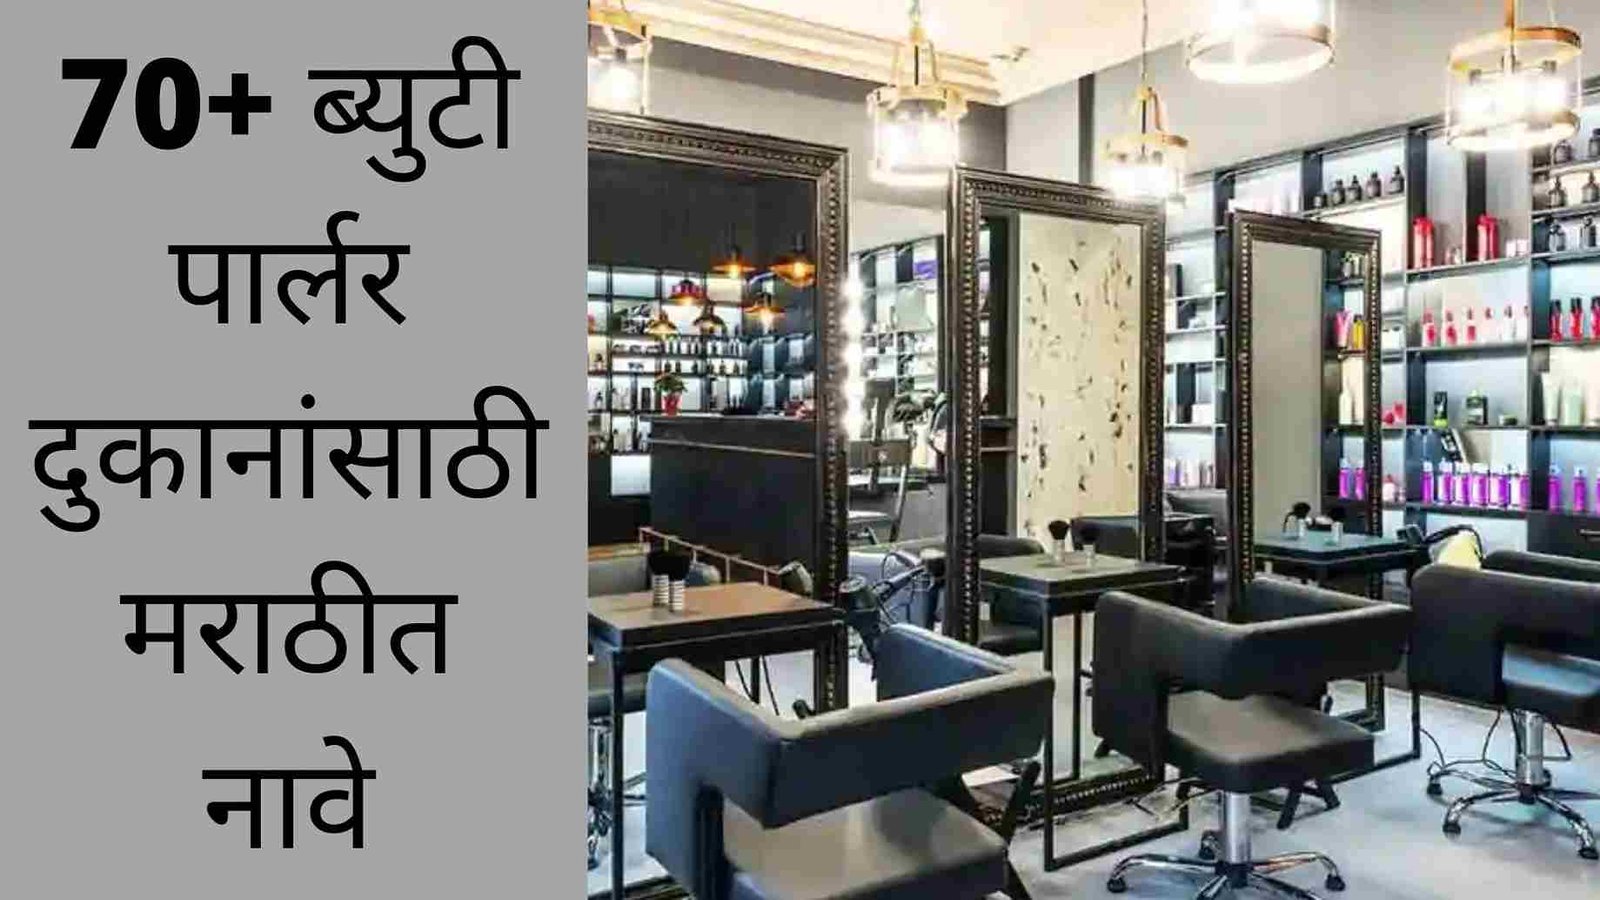 Beauty Parlour Shop Names Ideas In Marathi